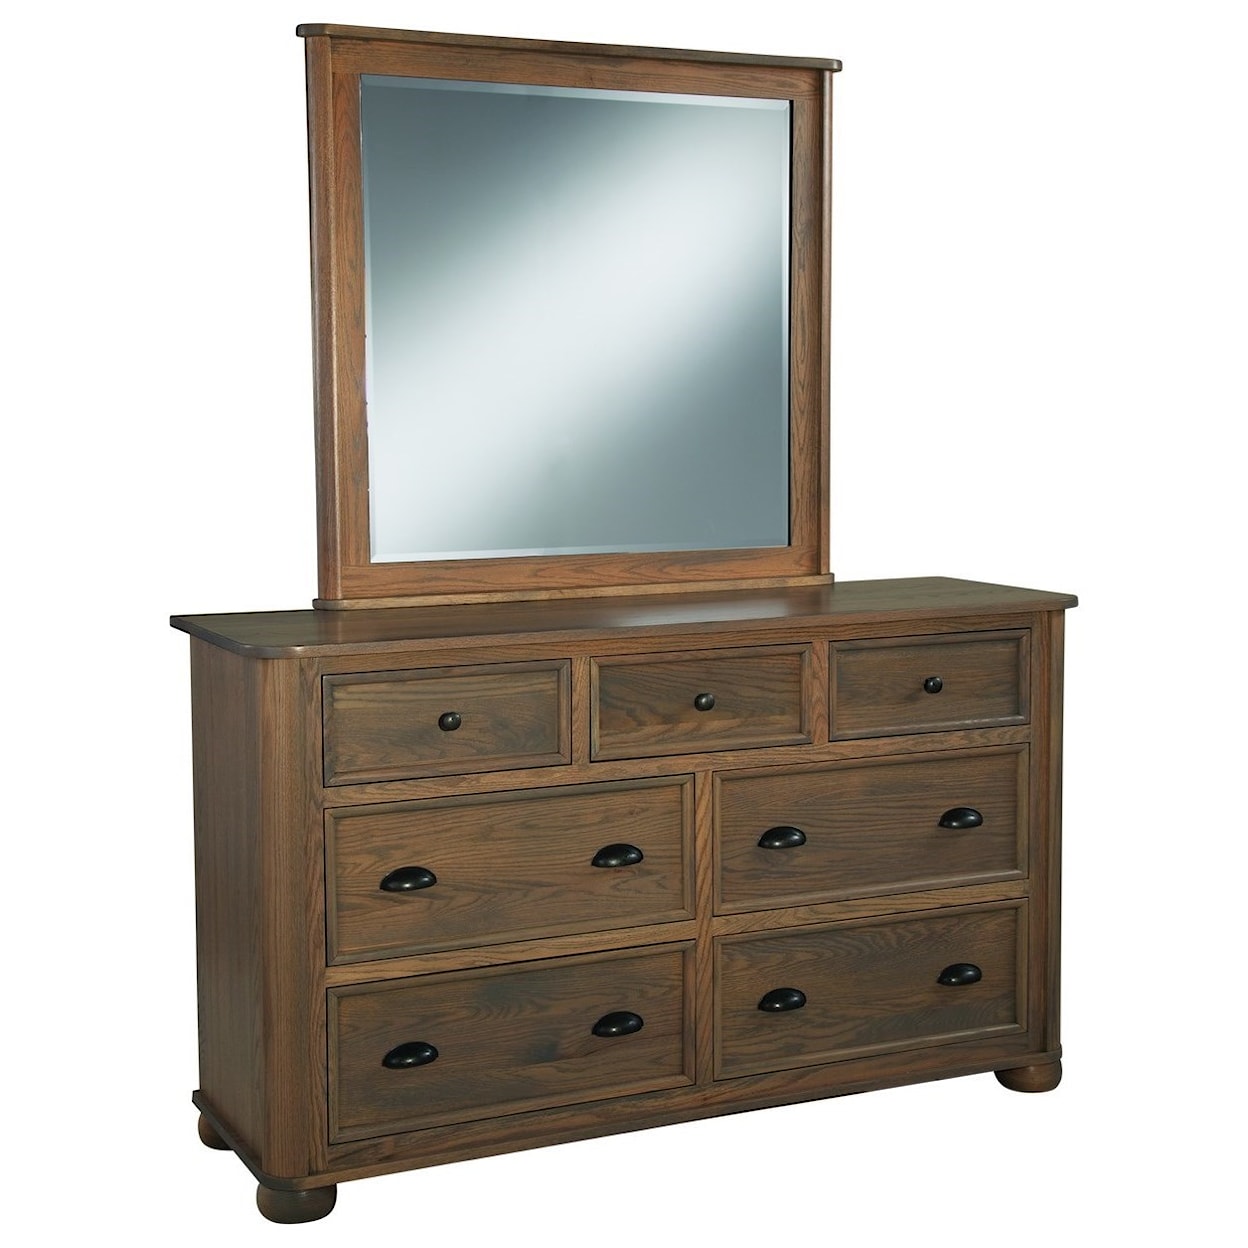 Mavin Kingsport Dresser and Mirror Set